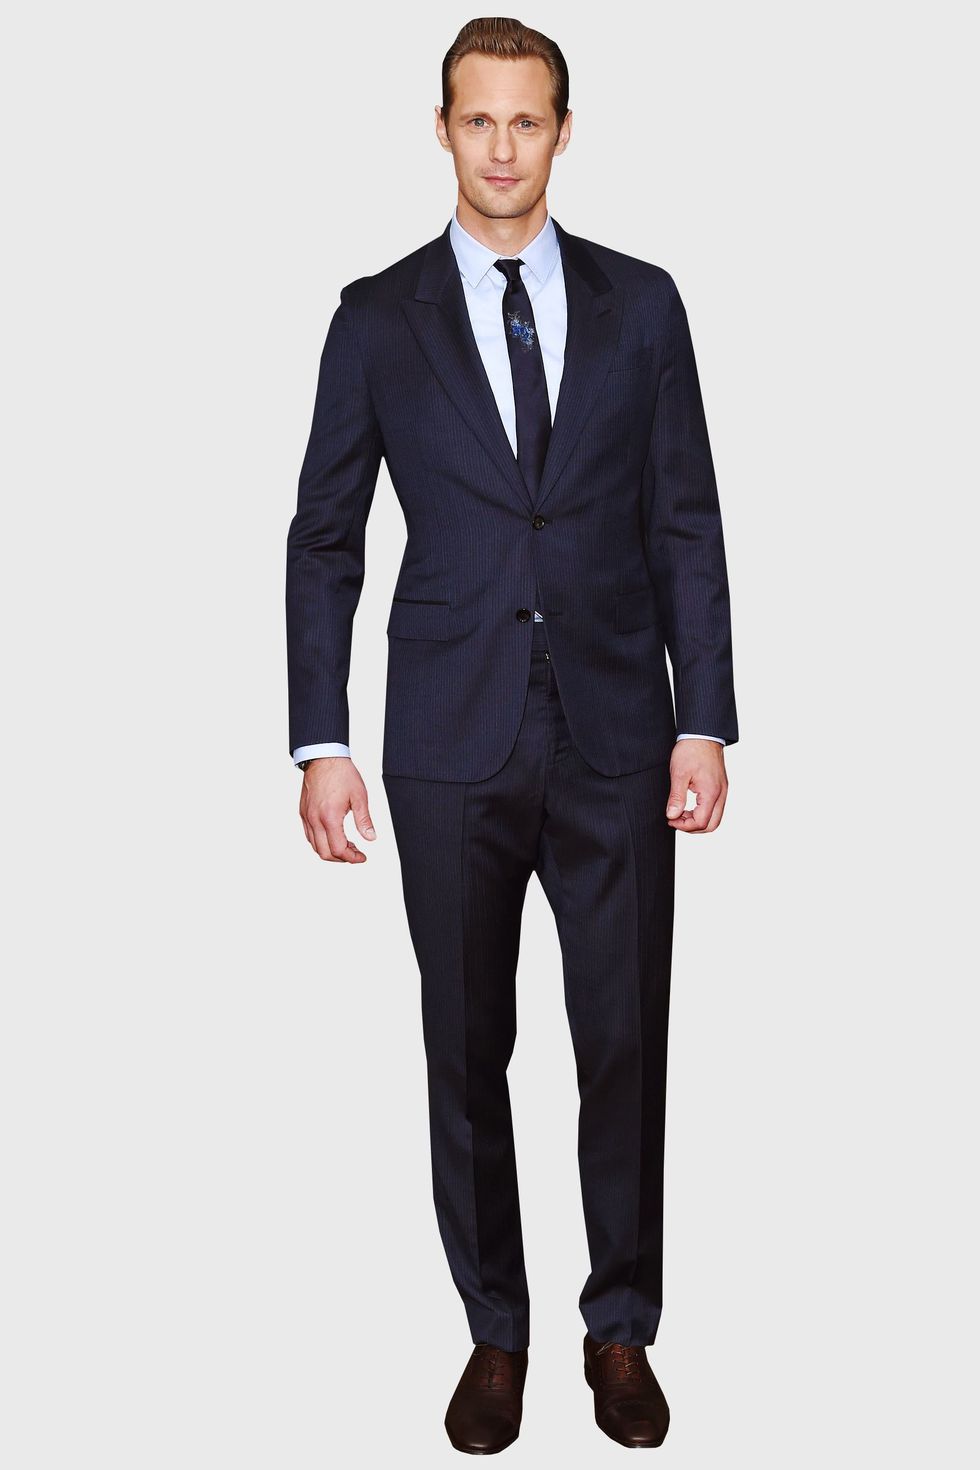 Men Navy Blue Suit Designer Wedding Dinner Tuxedo Casual Suits  (Coat+Vest+Pants)